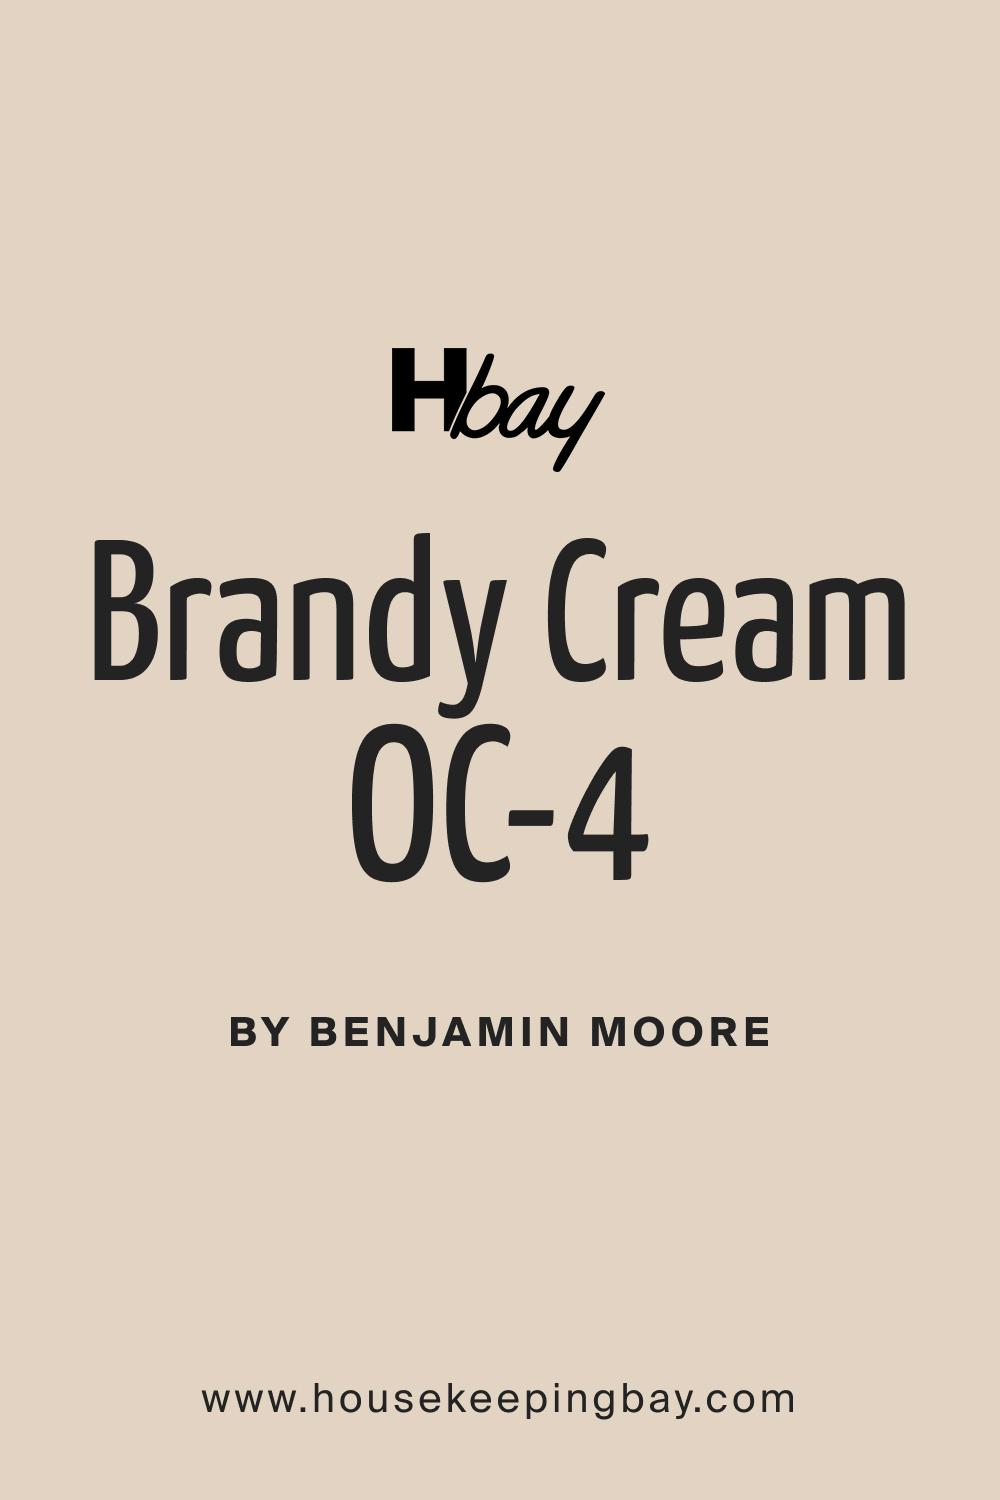 Brandy Cream OC 4 Paint Color by Benjamin Moore